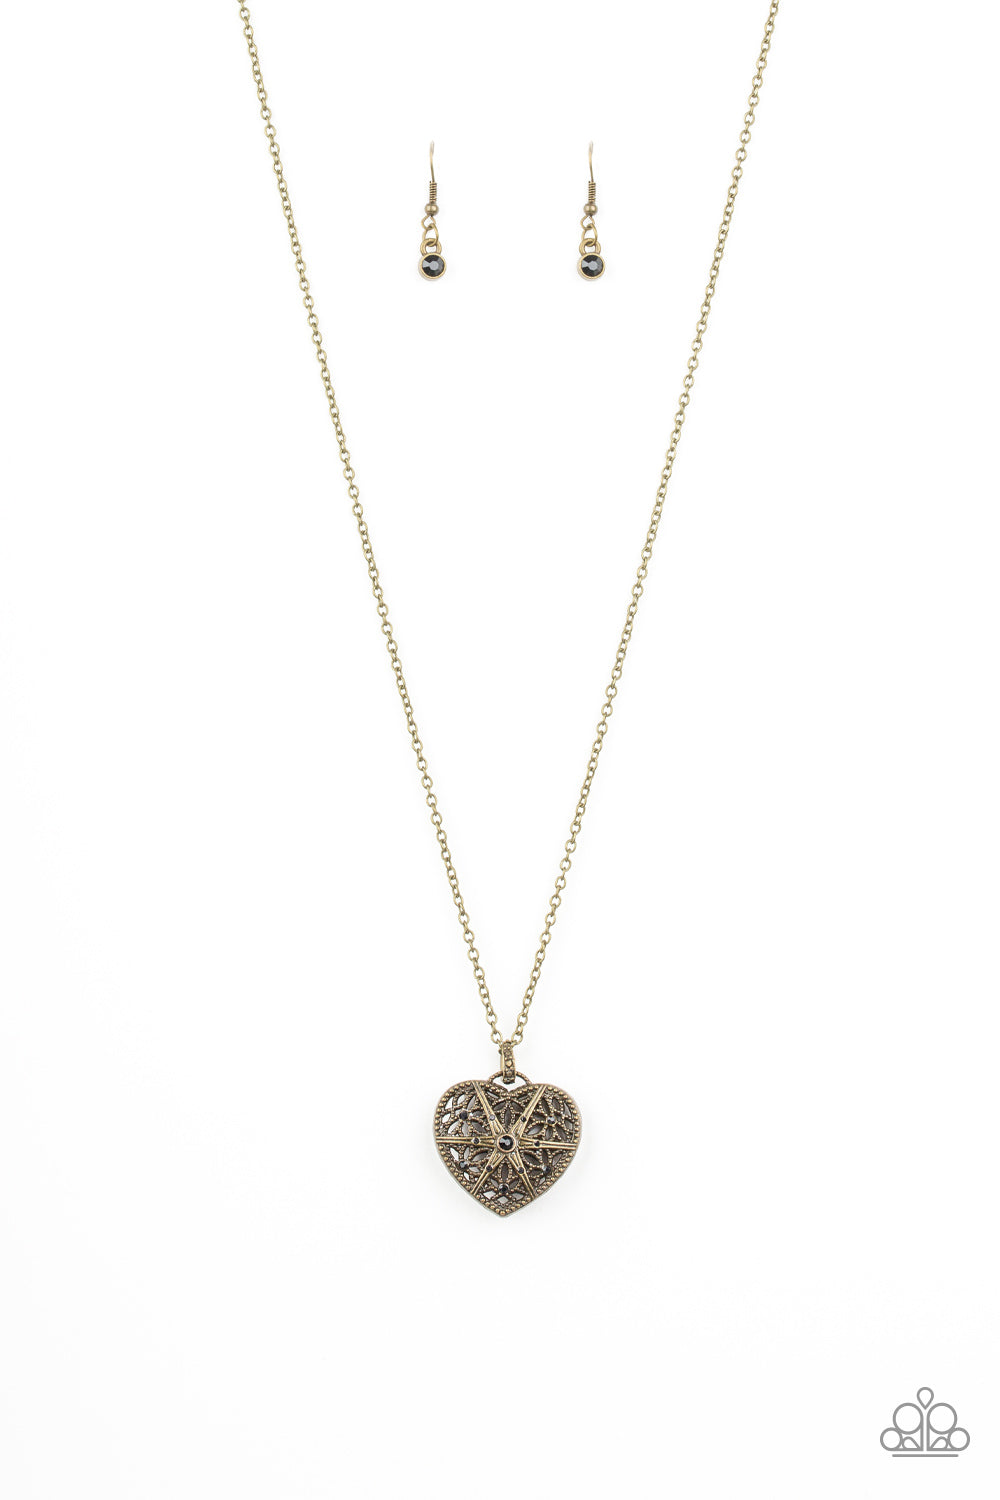 Casanova Charm - Black (Heart Rhinestone) Necklace freeshipping - JewLz4u Gemstone Gallery